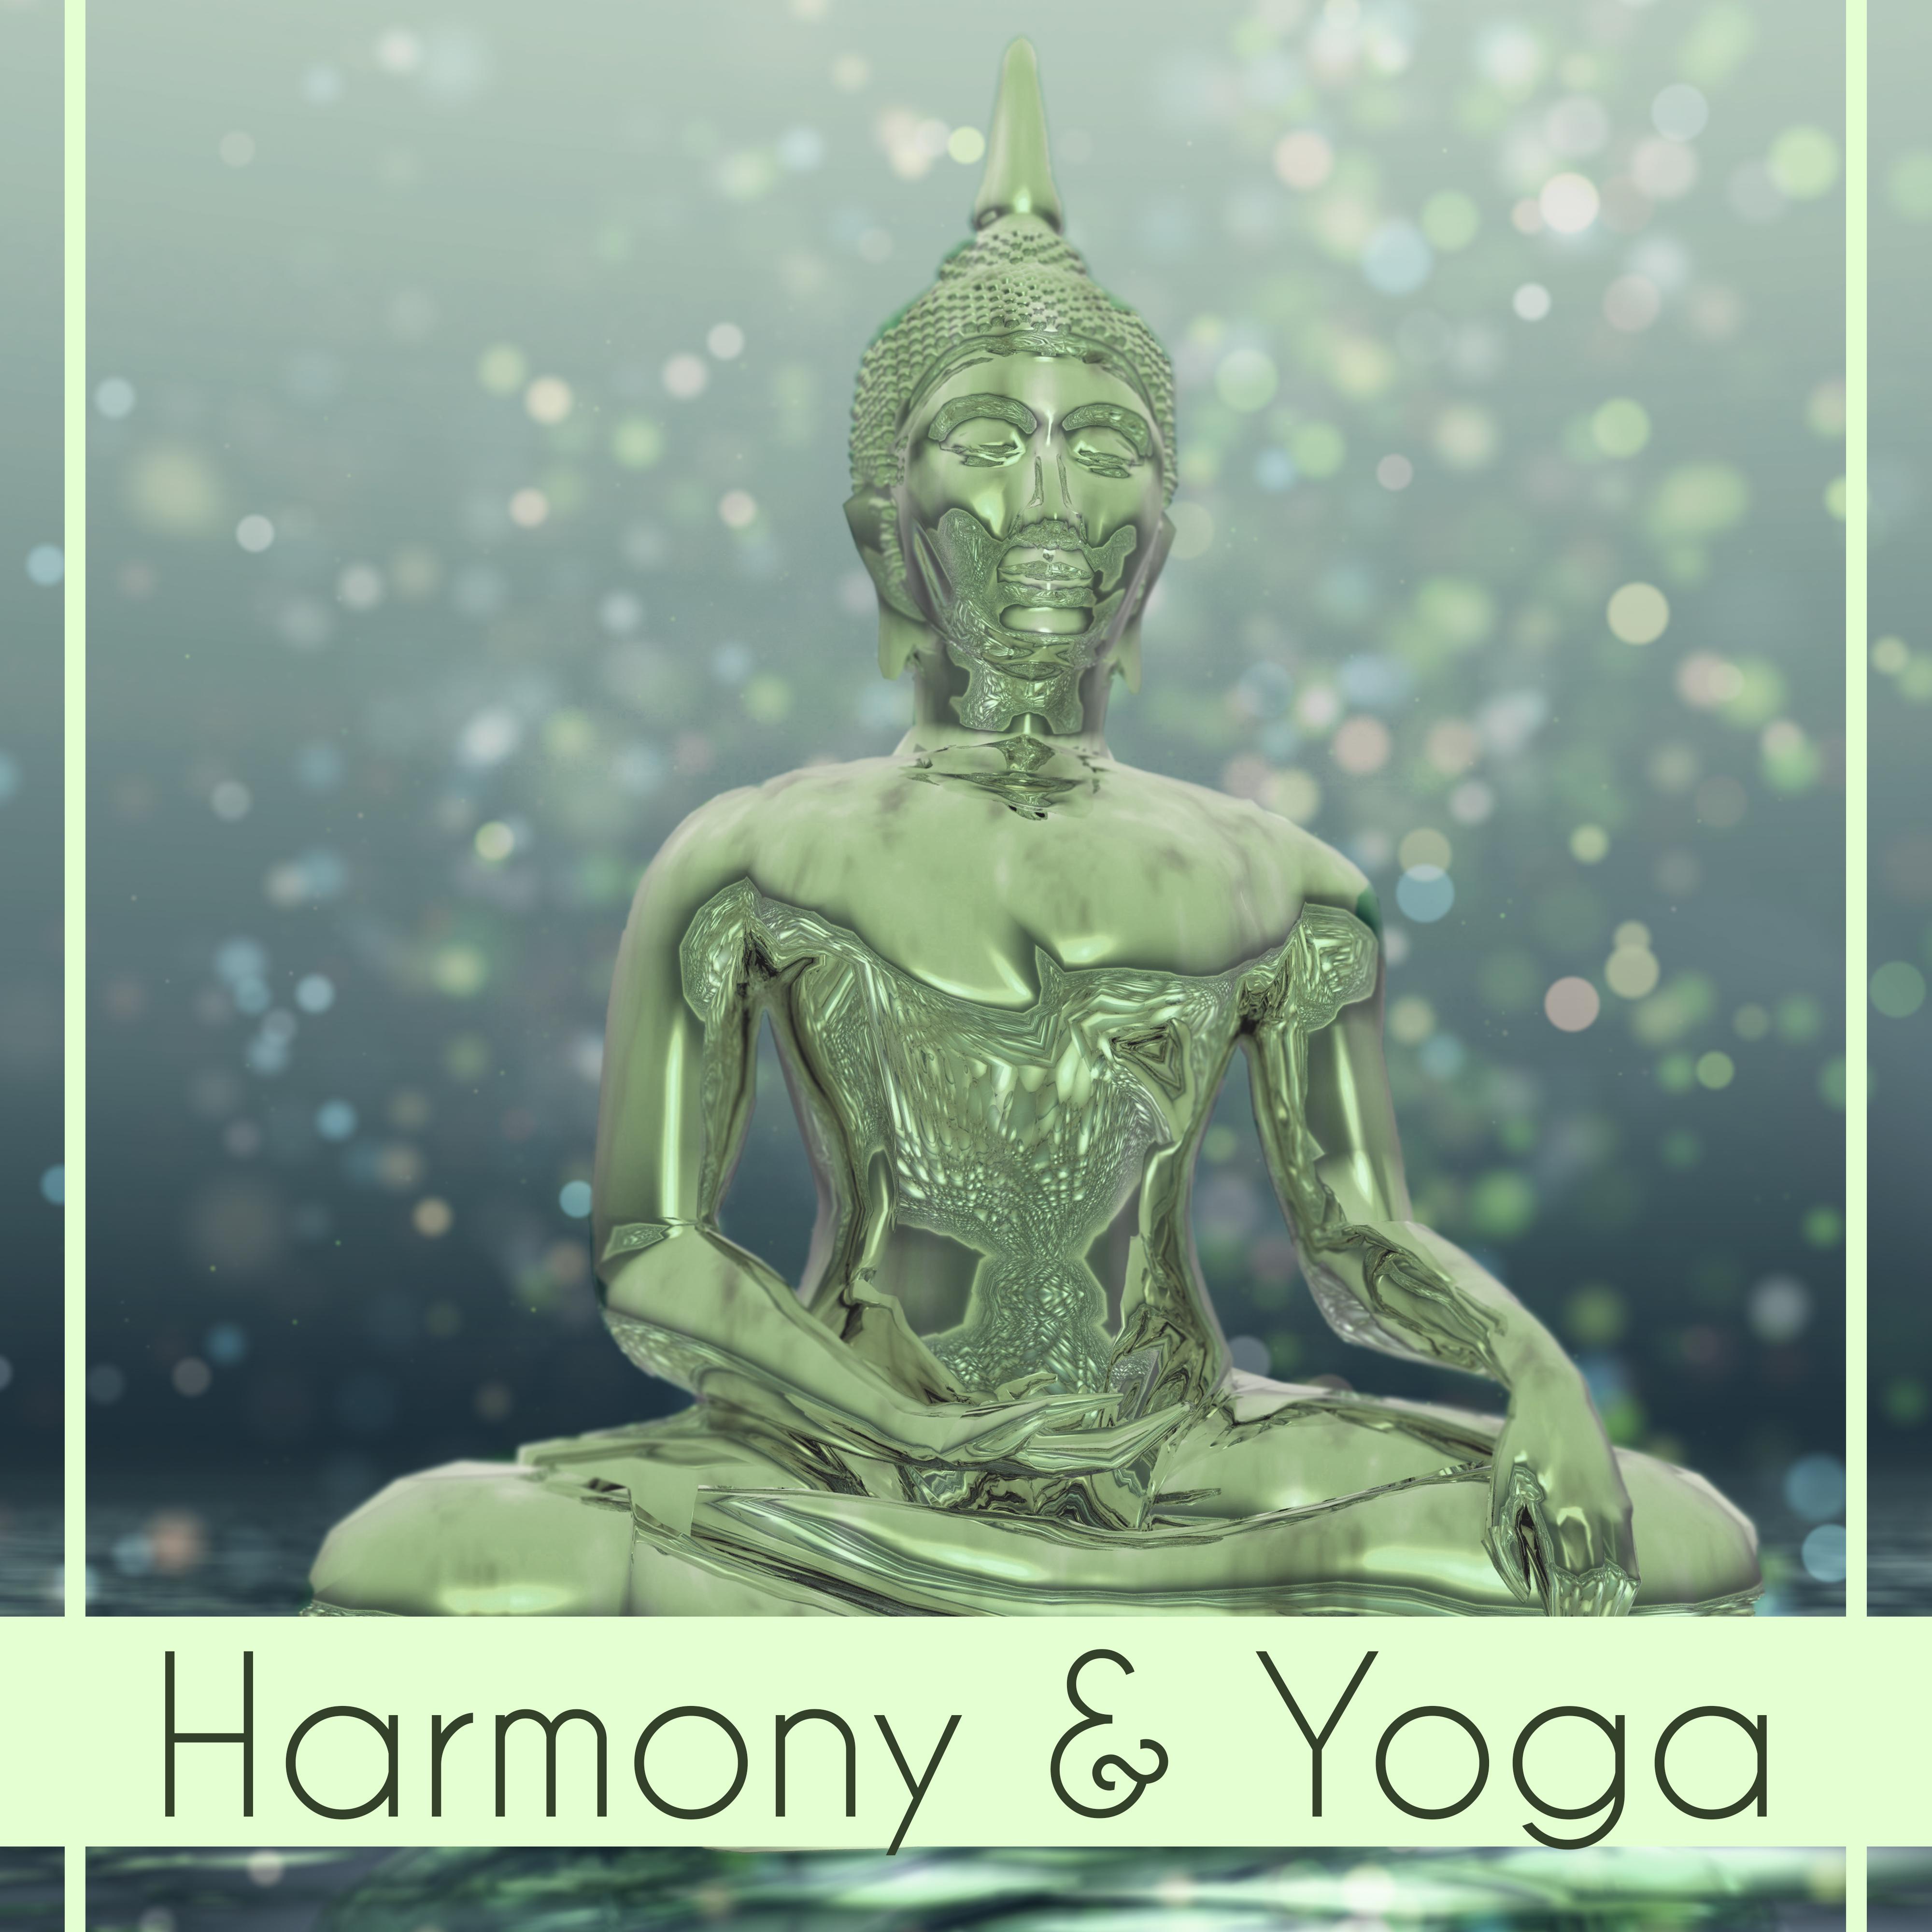 Harmony  Yoga  Meditation Music, Zen, Training Yoga, Peaceful Music for Relief, Clear Mind, Calmness